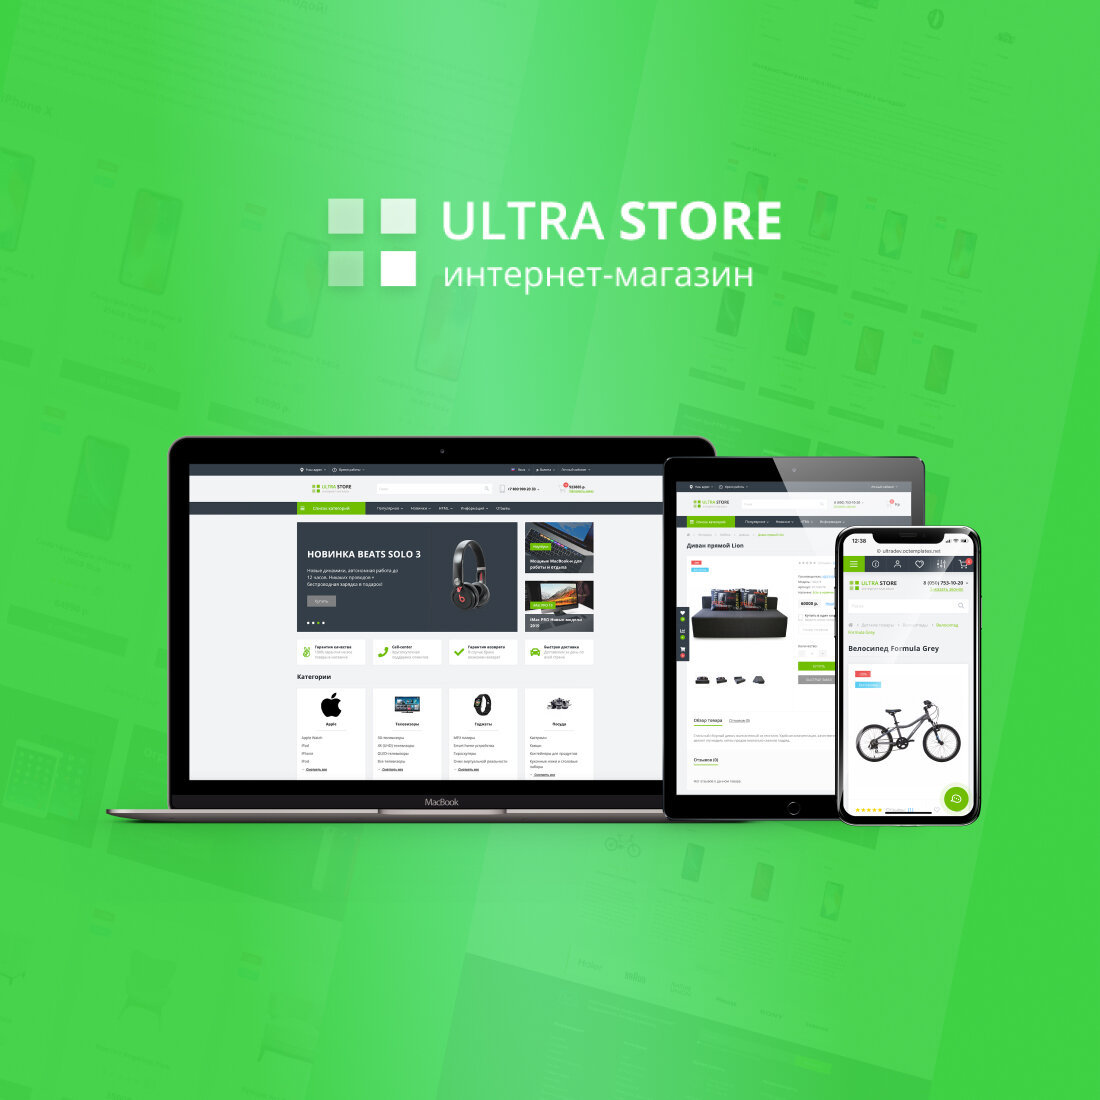 UltraStore - адаптивный универсальный шаблон v2.6